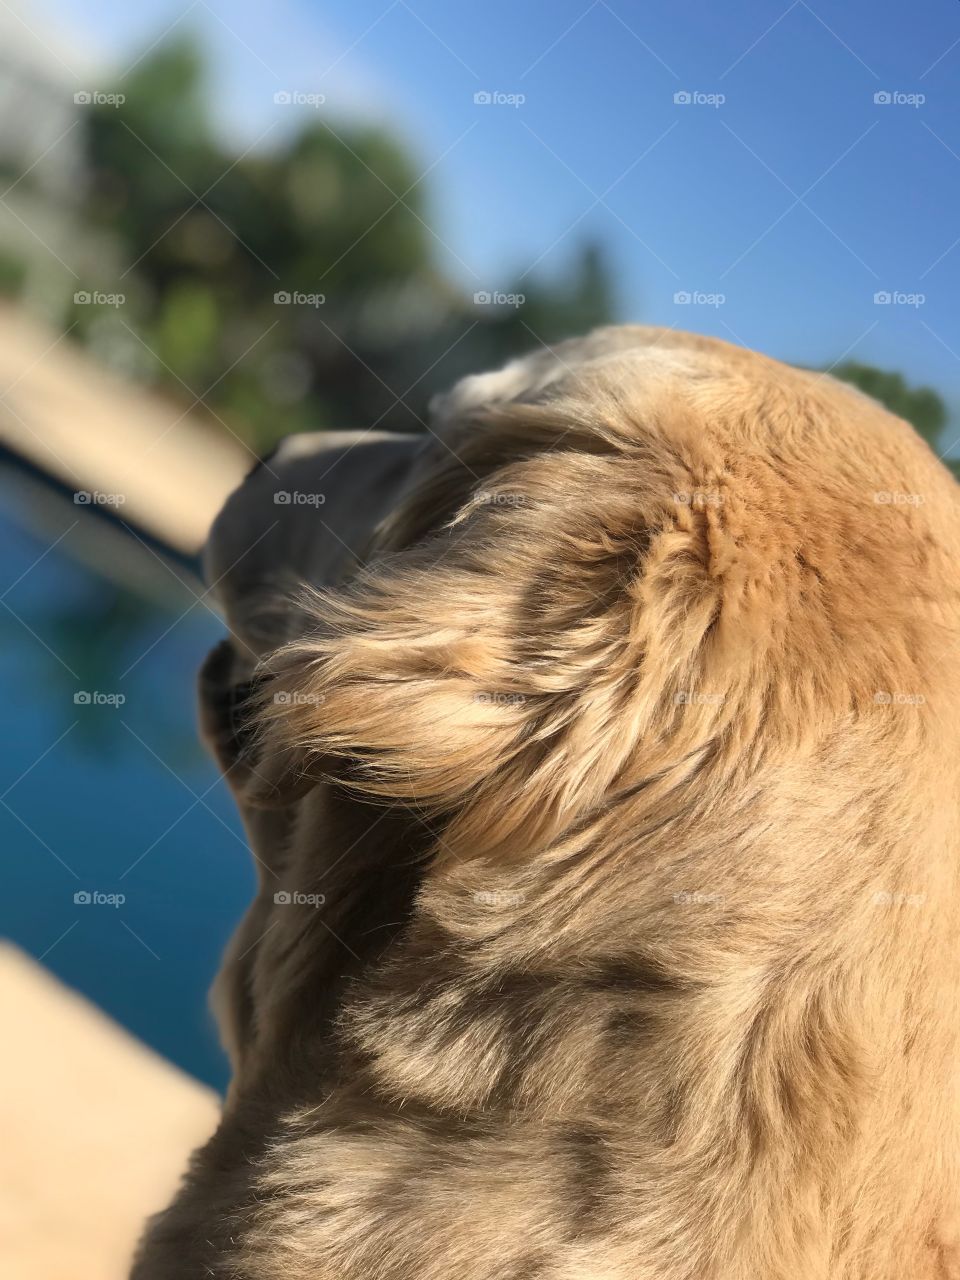 Dog staring peacefully